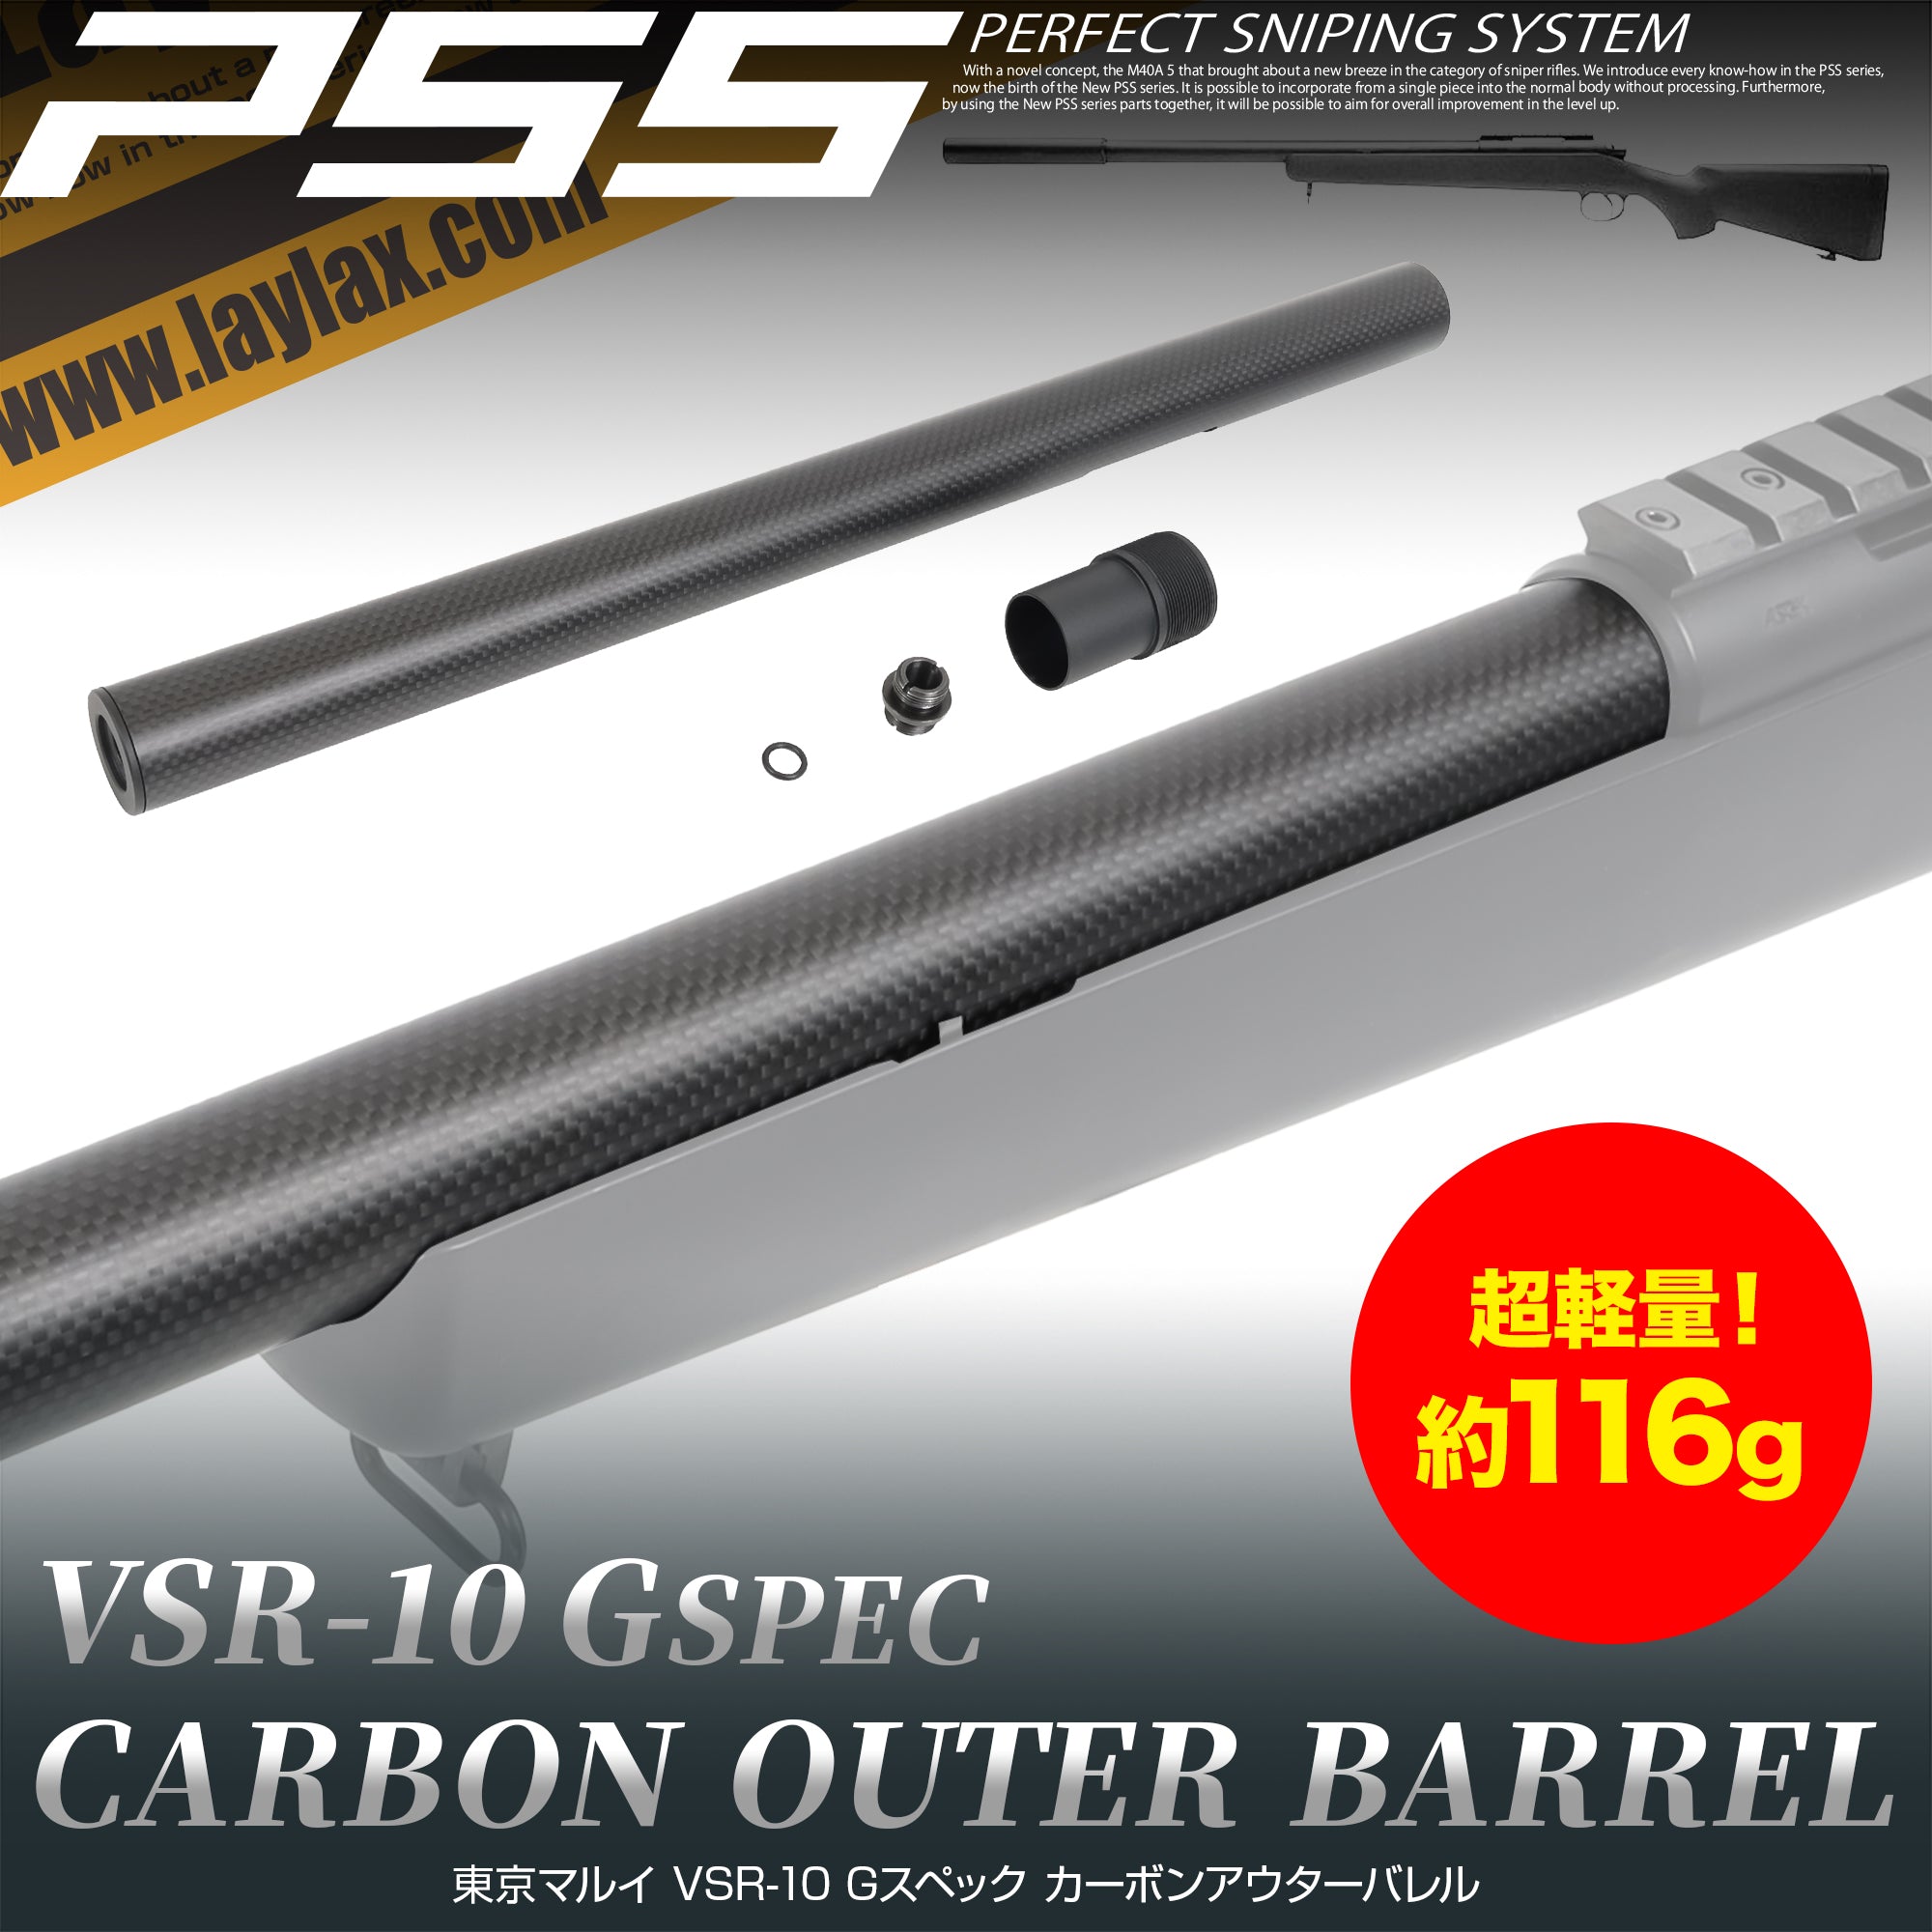 VSR-10 Gスペック カーボンアウターバレル[PSS]